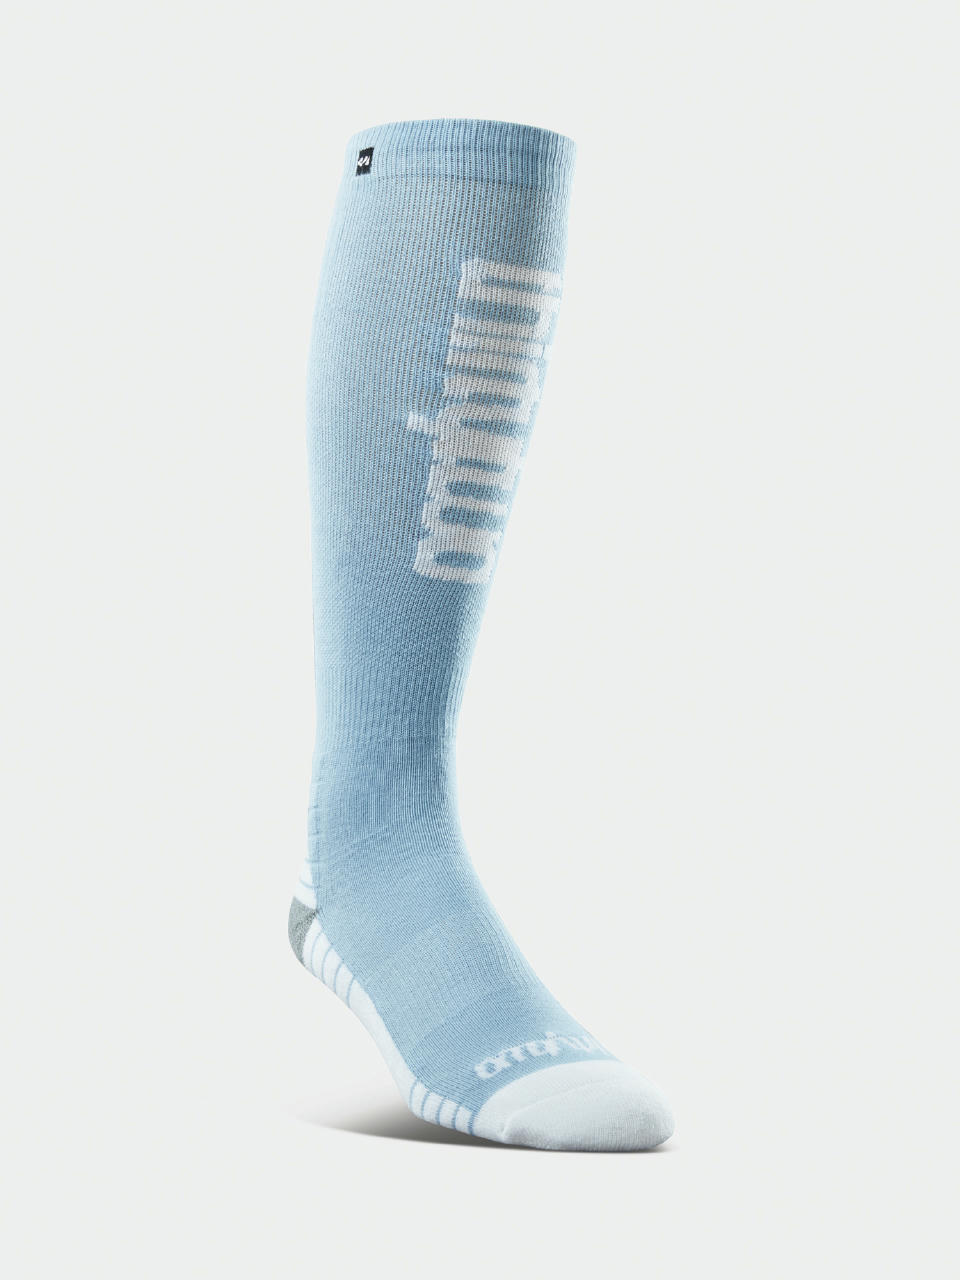 ThirtyTwo Double Socken Wmn (blue)